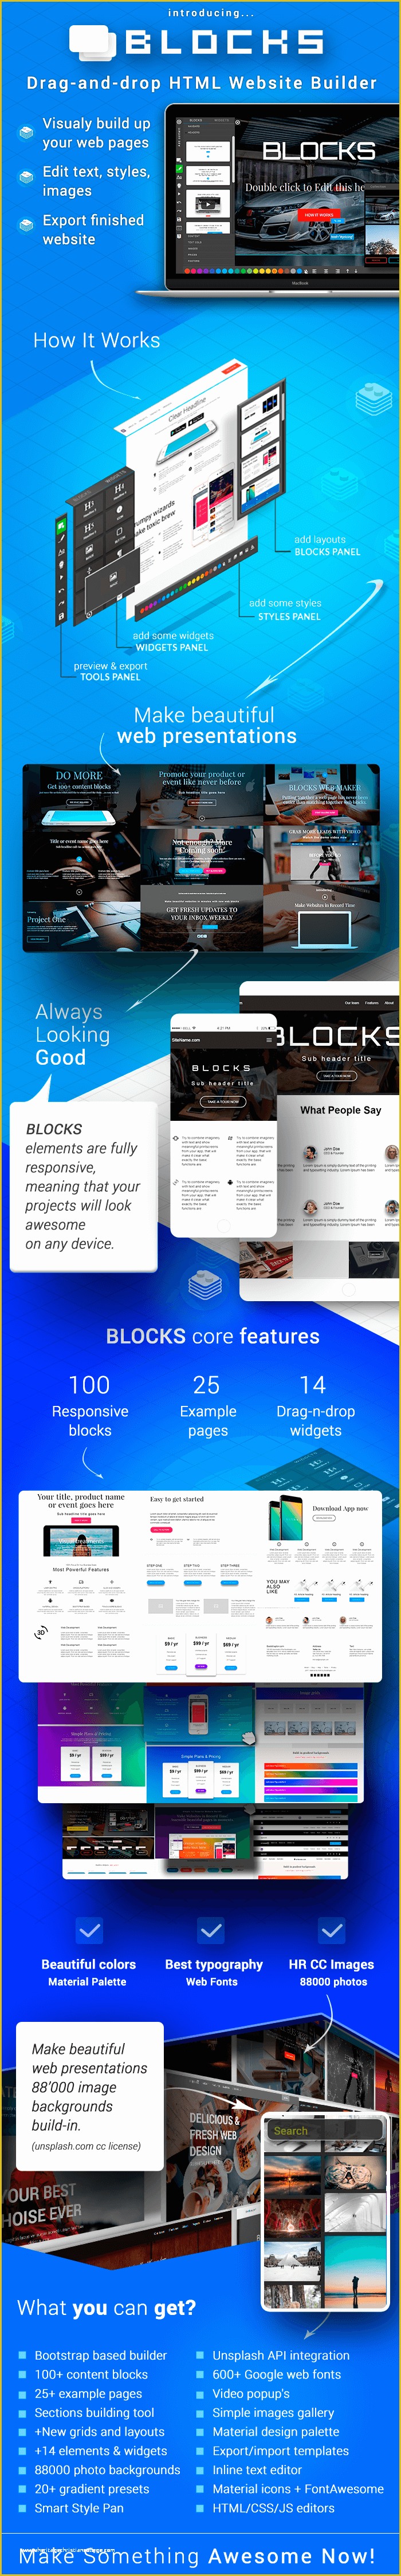 Free Template Builder for Websites Of Blocks Drag and Drop Builder